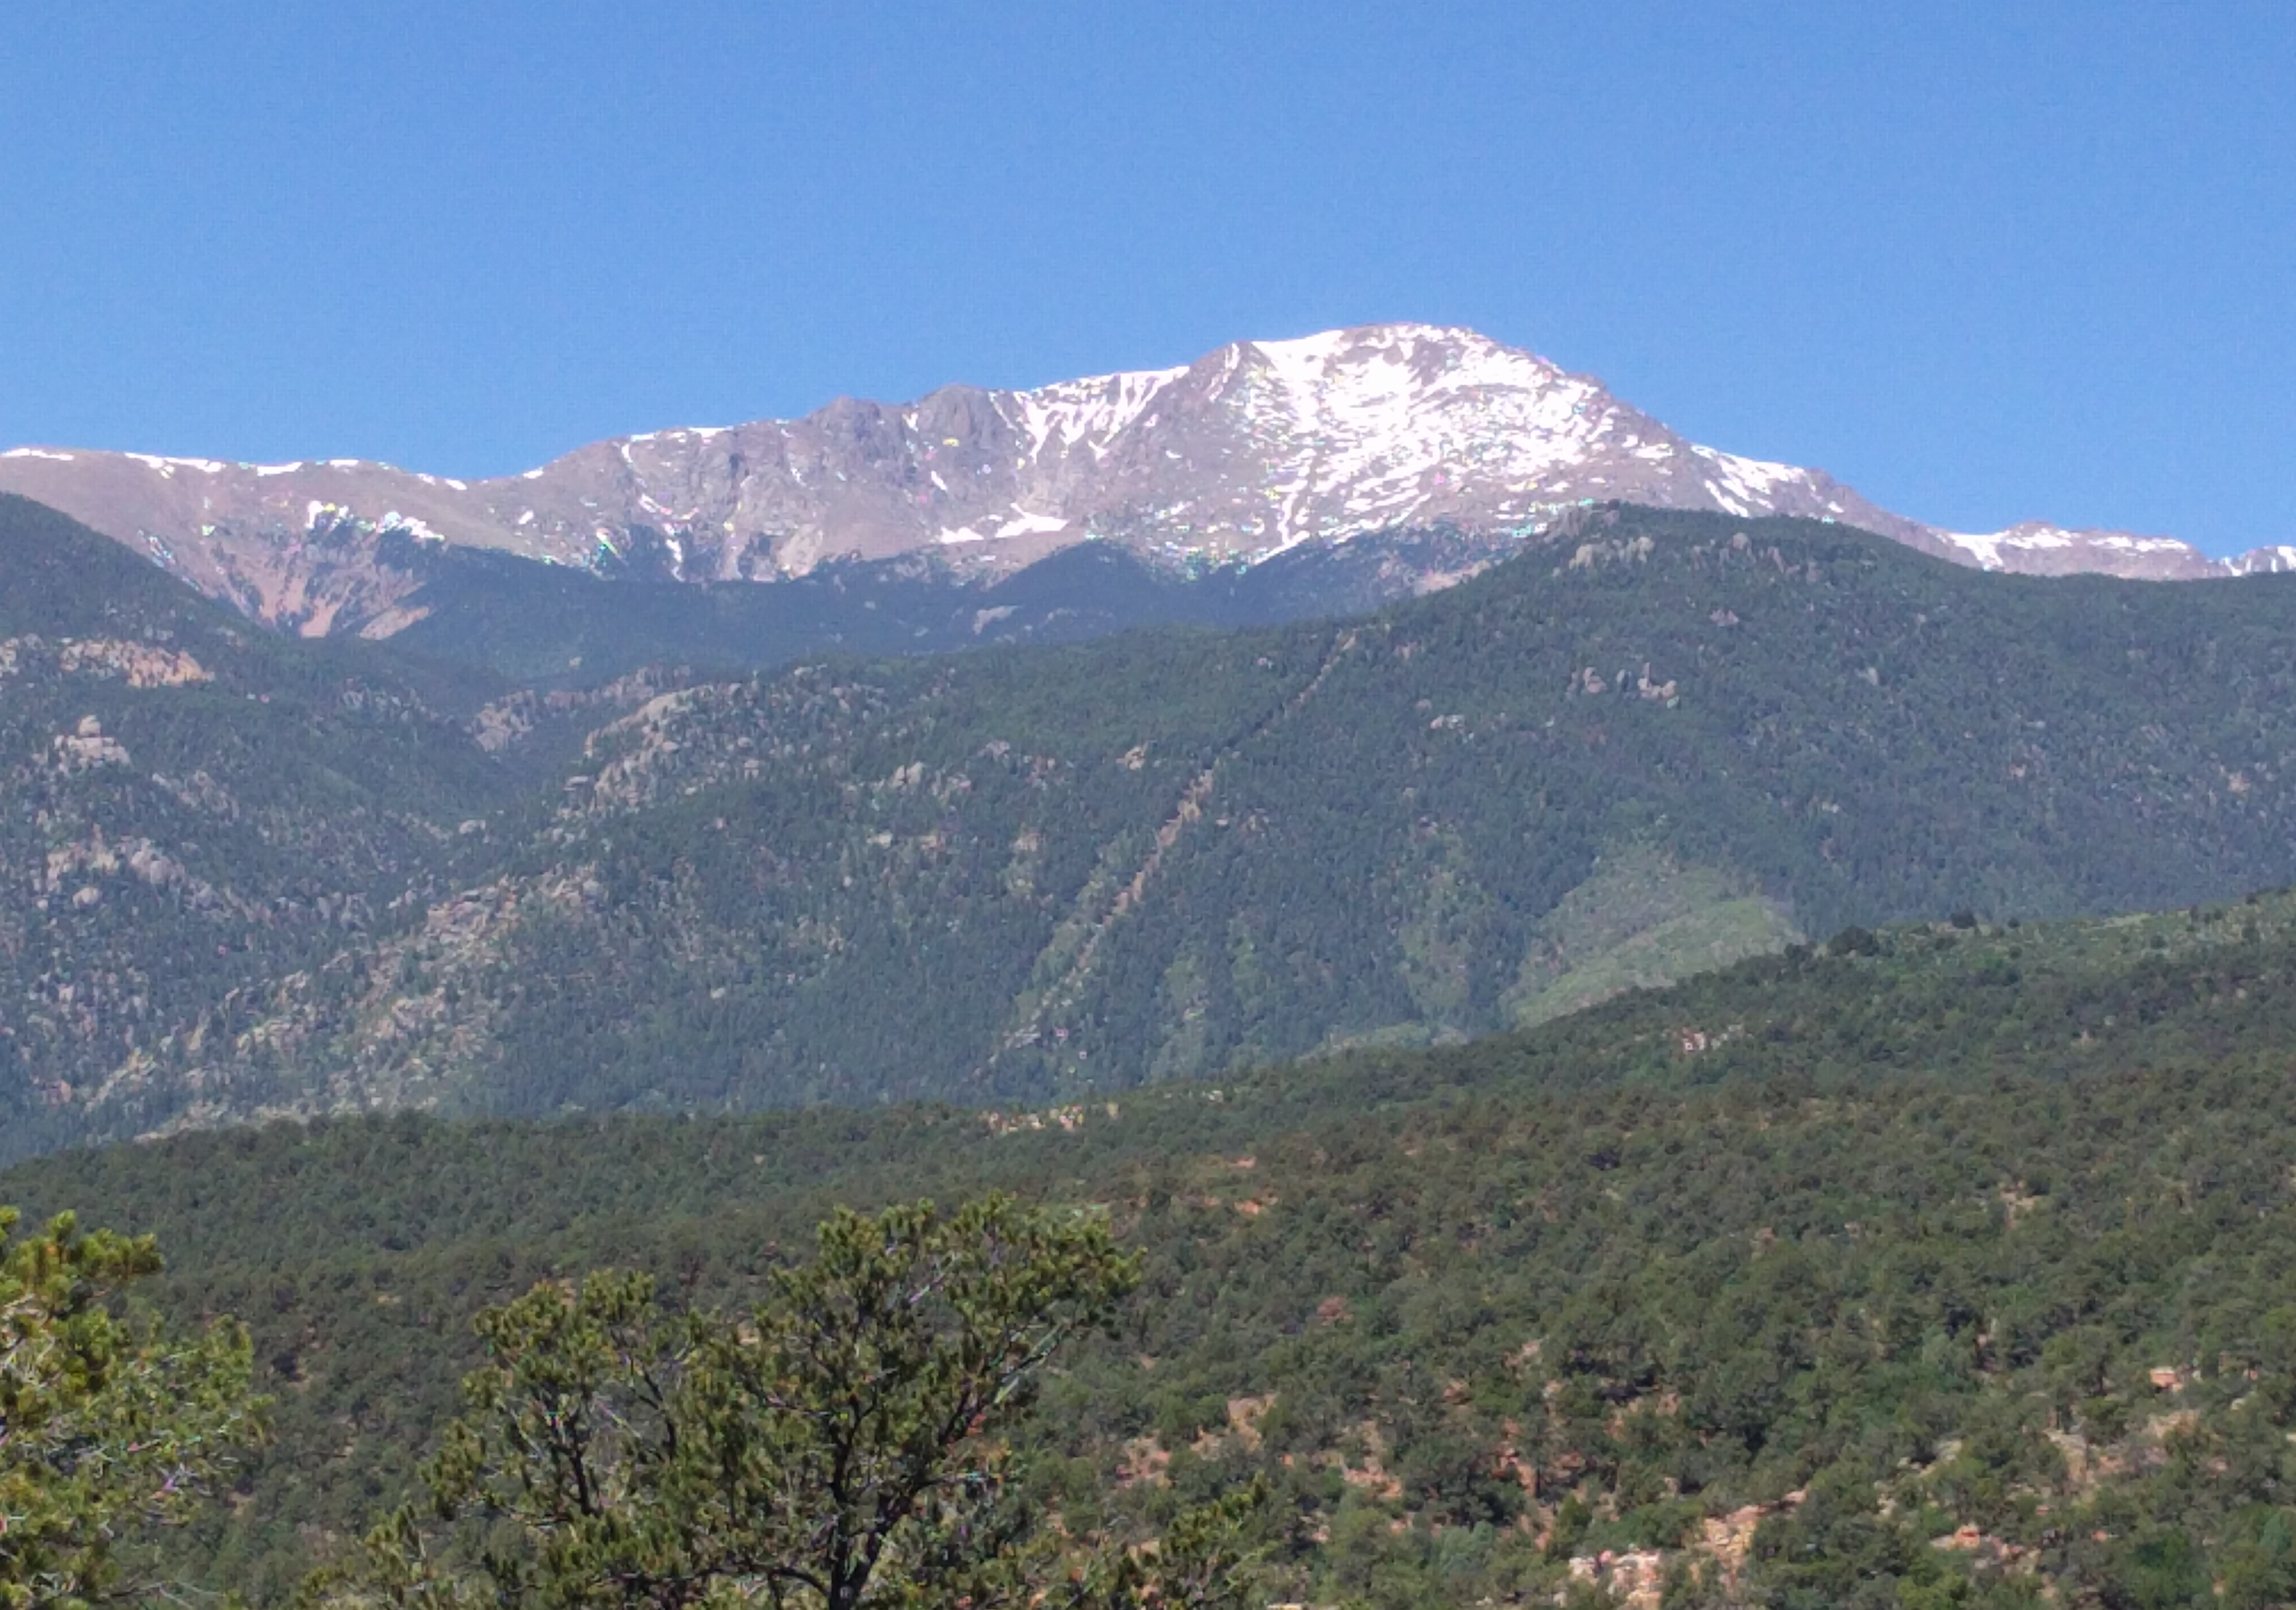 Pikes Peak Ascent Attempt - Part 3: The Climb